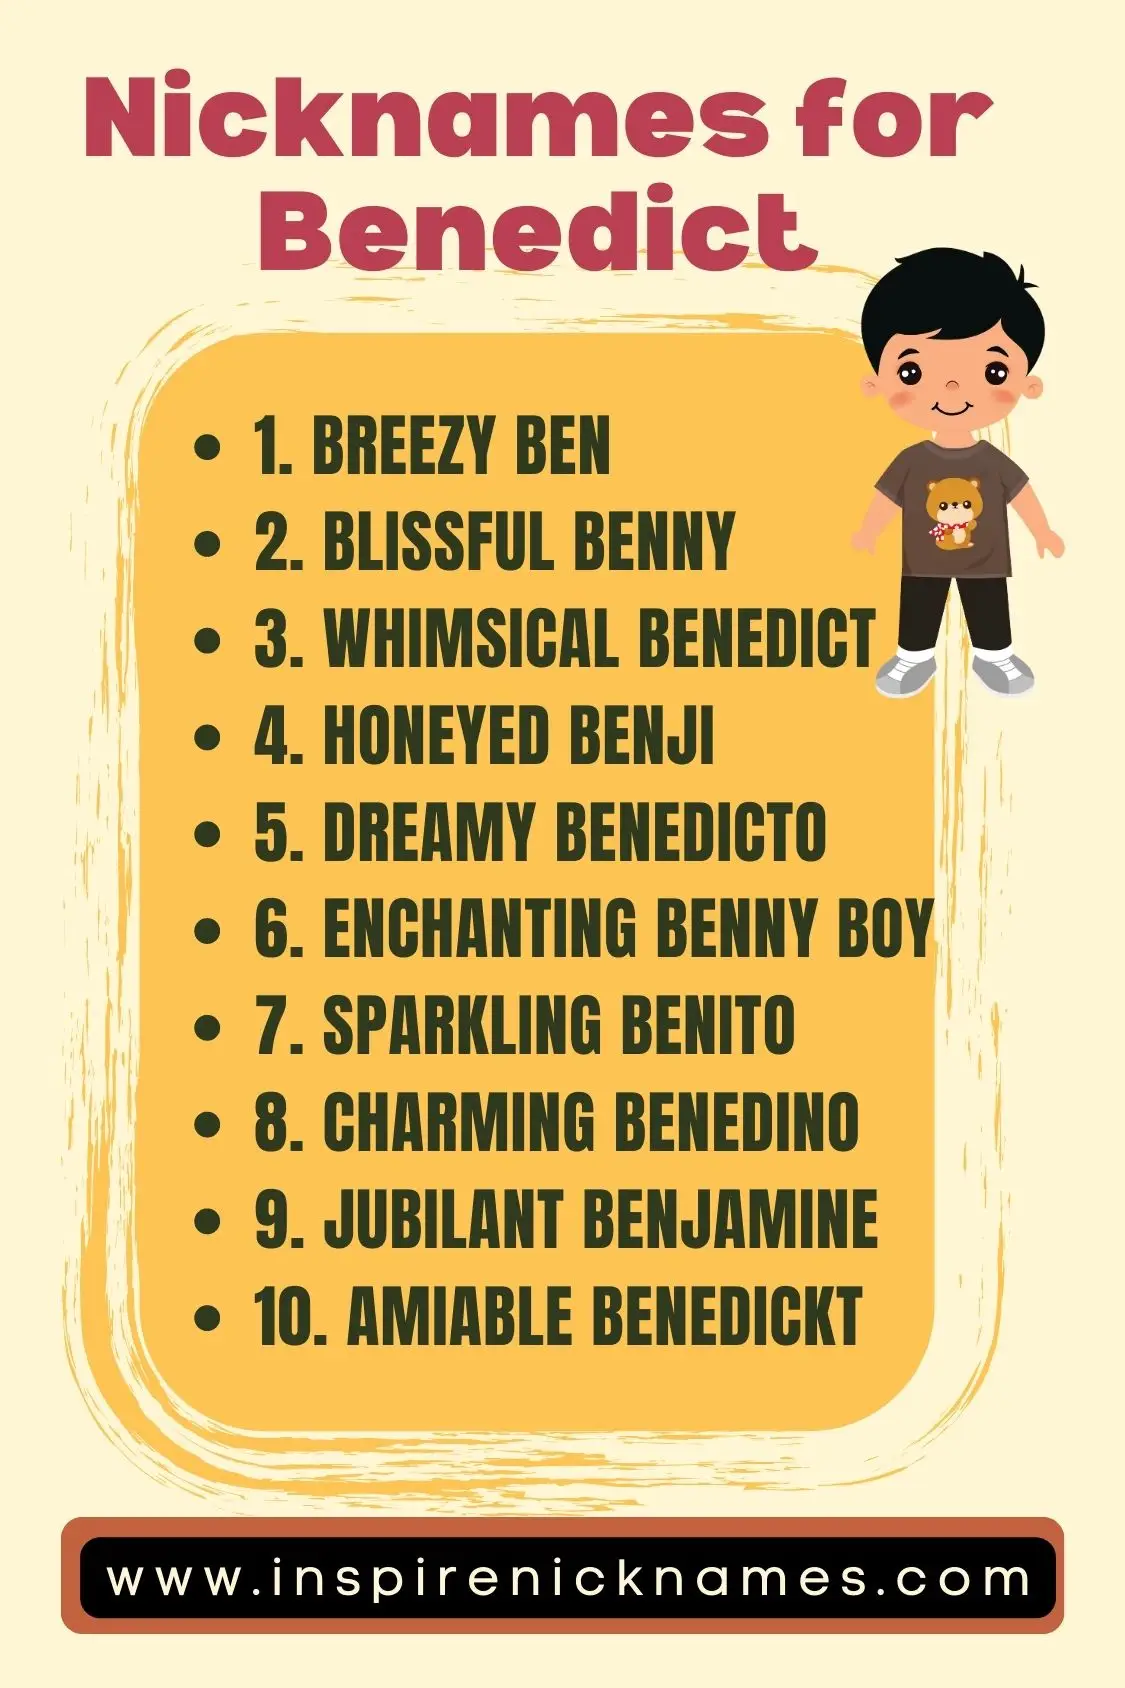 nicknames for benedict list ideas